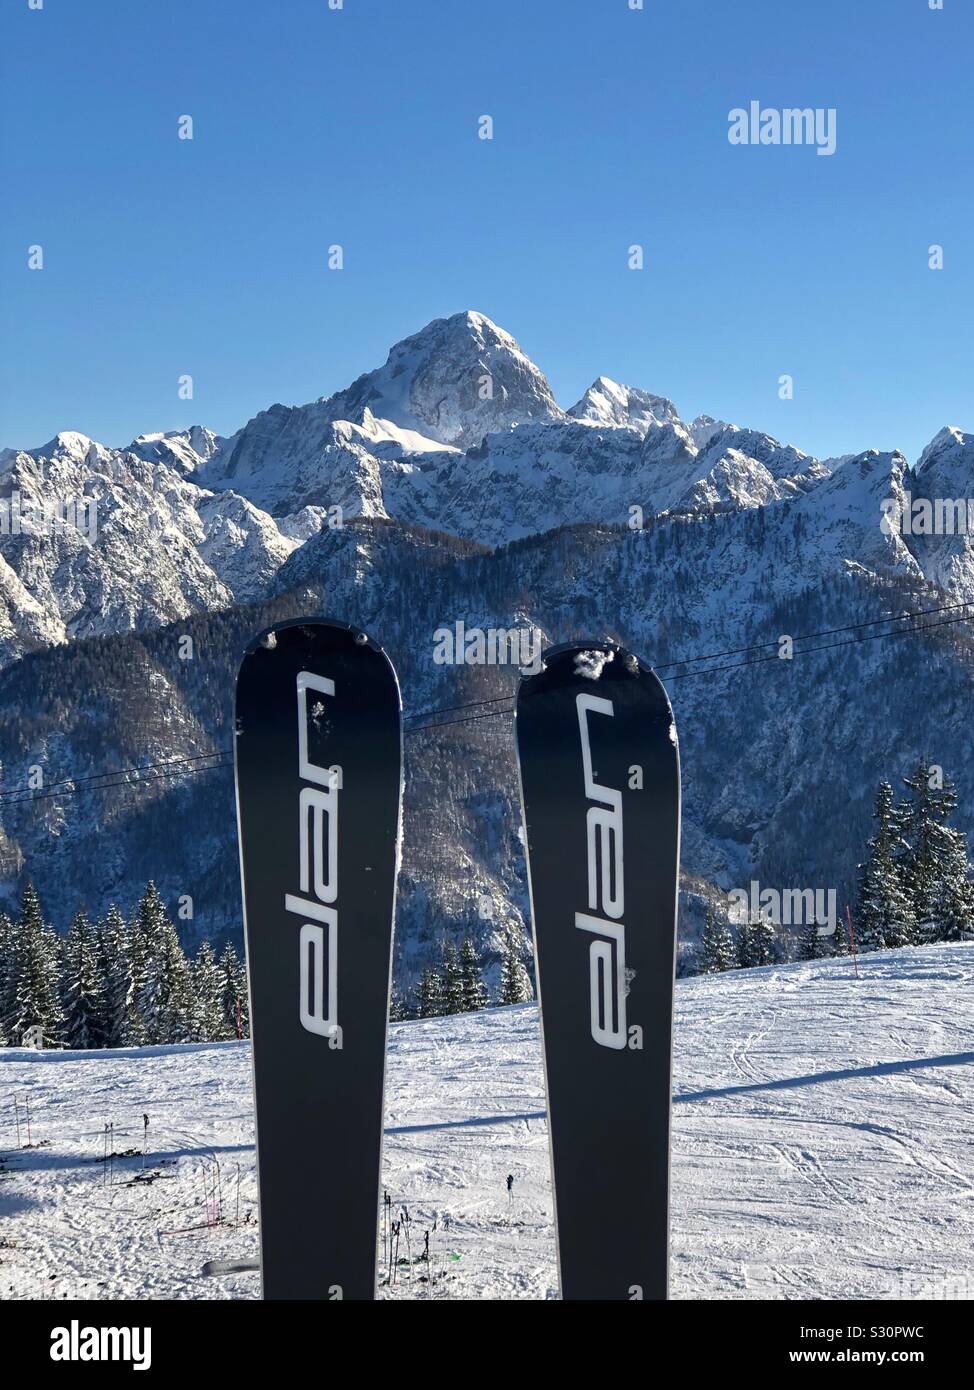 Elan ski hi-res stock photography and images - Alamy